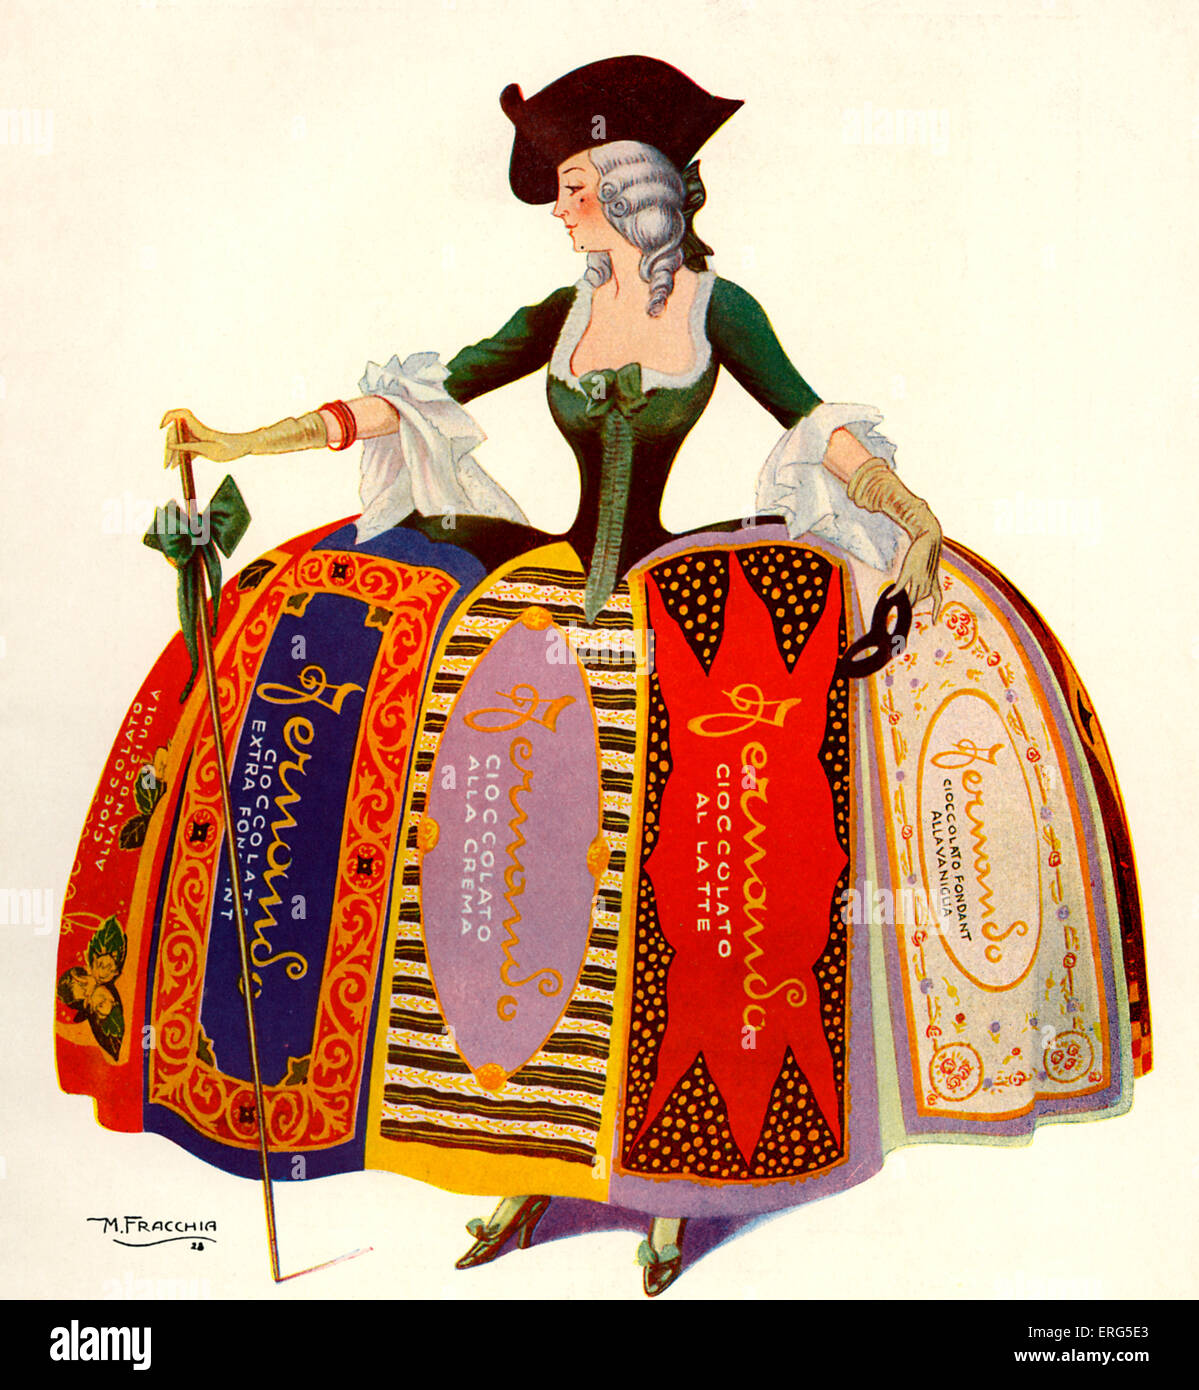 1928 - Werbung für italienische Schokolade Fernando (Ciocolatto Fernando). Der Slogan lautet: "Kostüm Antico, Ciocolatto Stockfoto